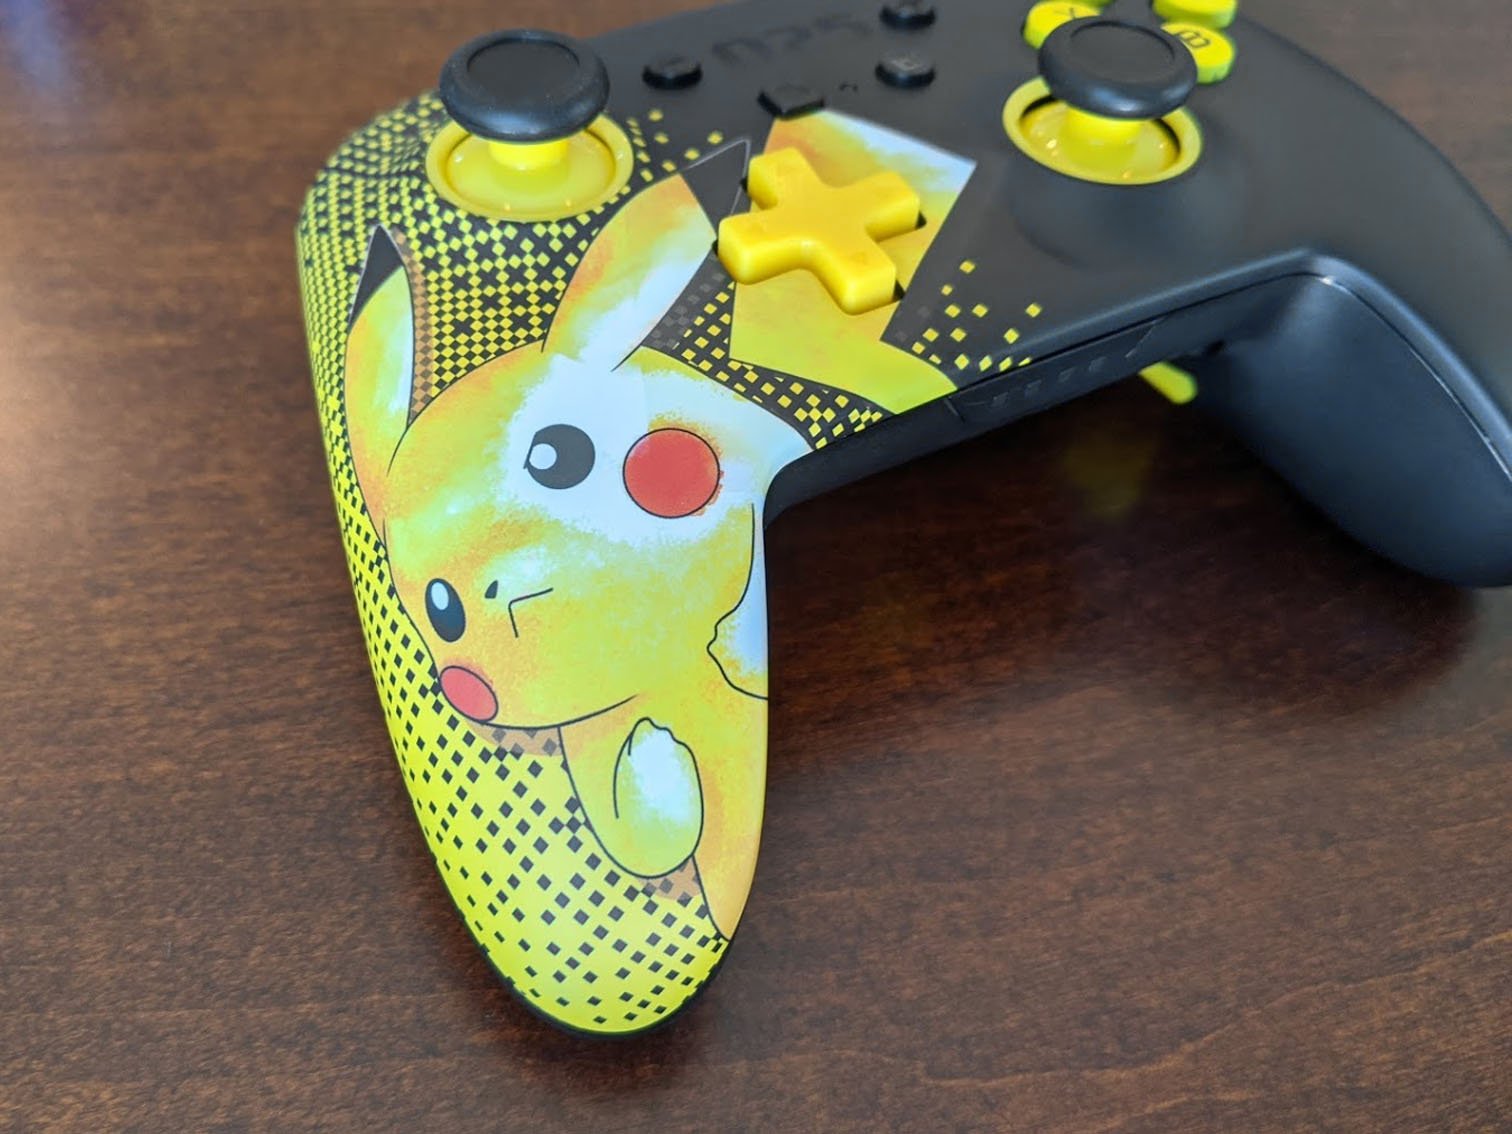 Powera Pikachu Contrôleur Pikachu Gros plan